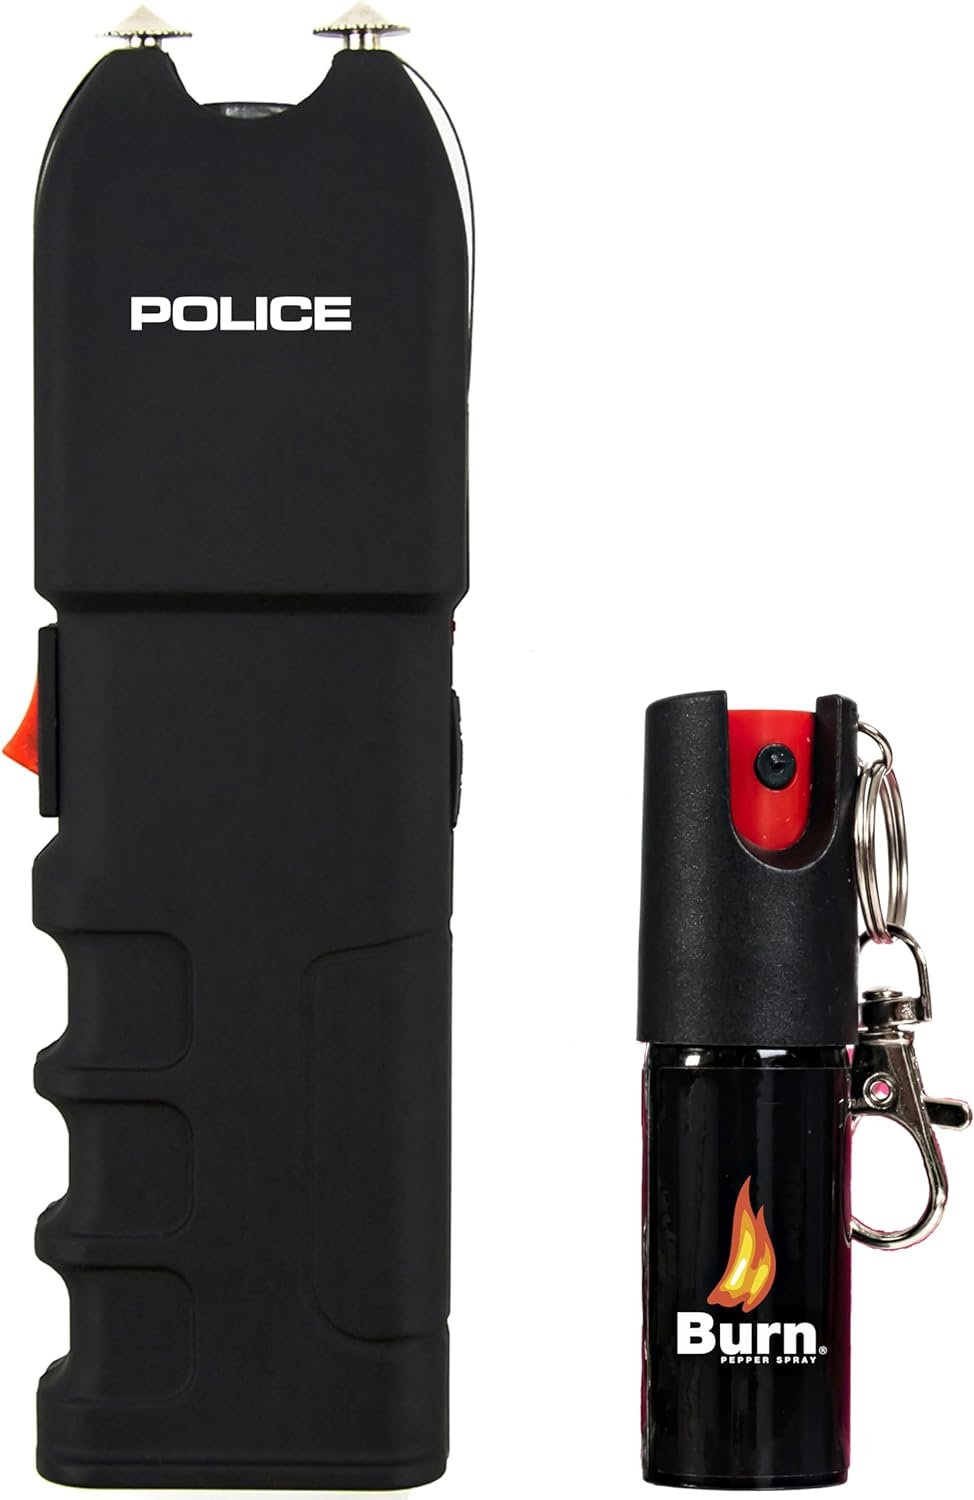 Police Stun Gun Burn Pepper Spray Combo - 928 Black